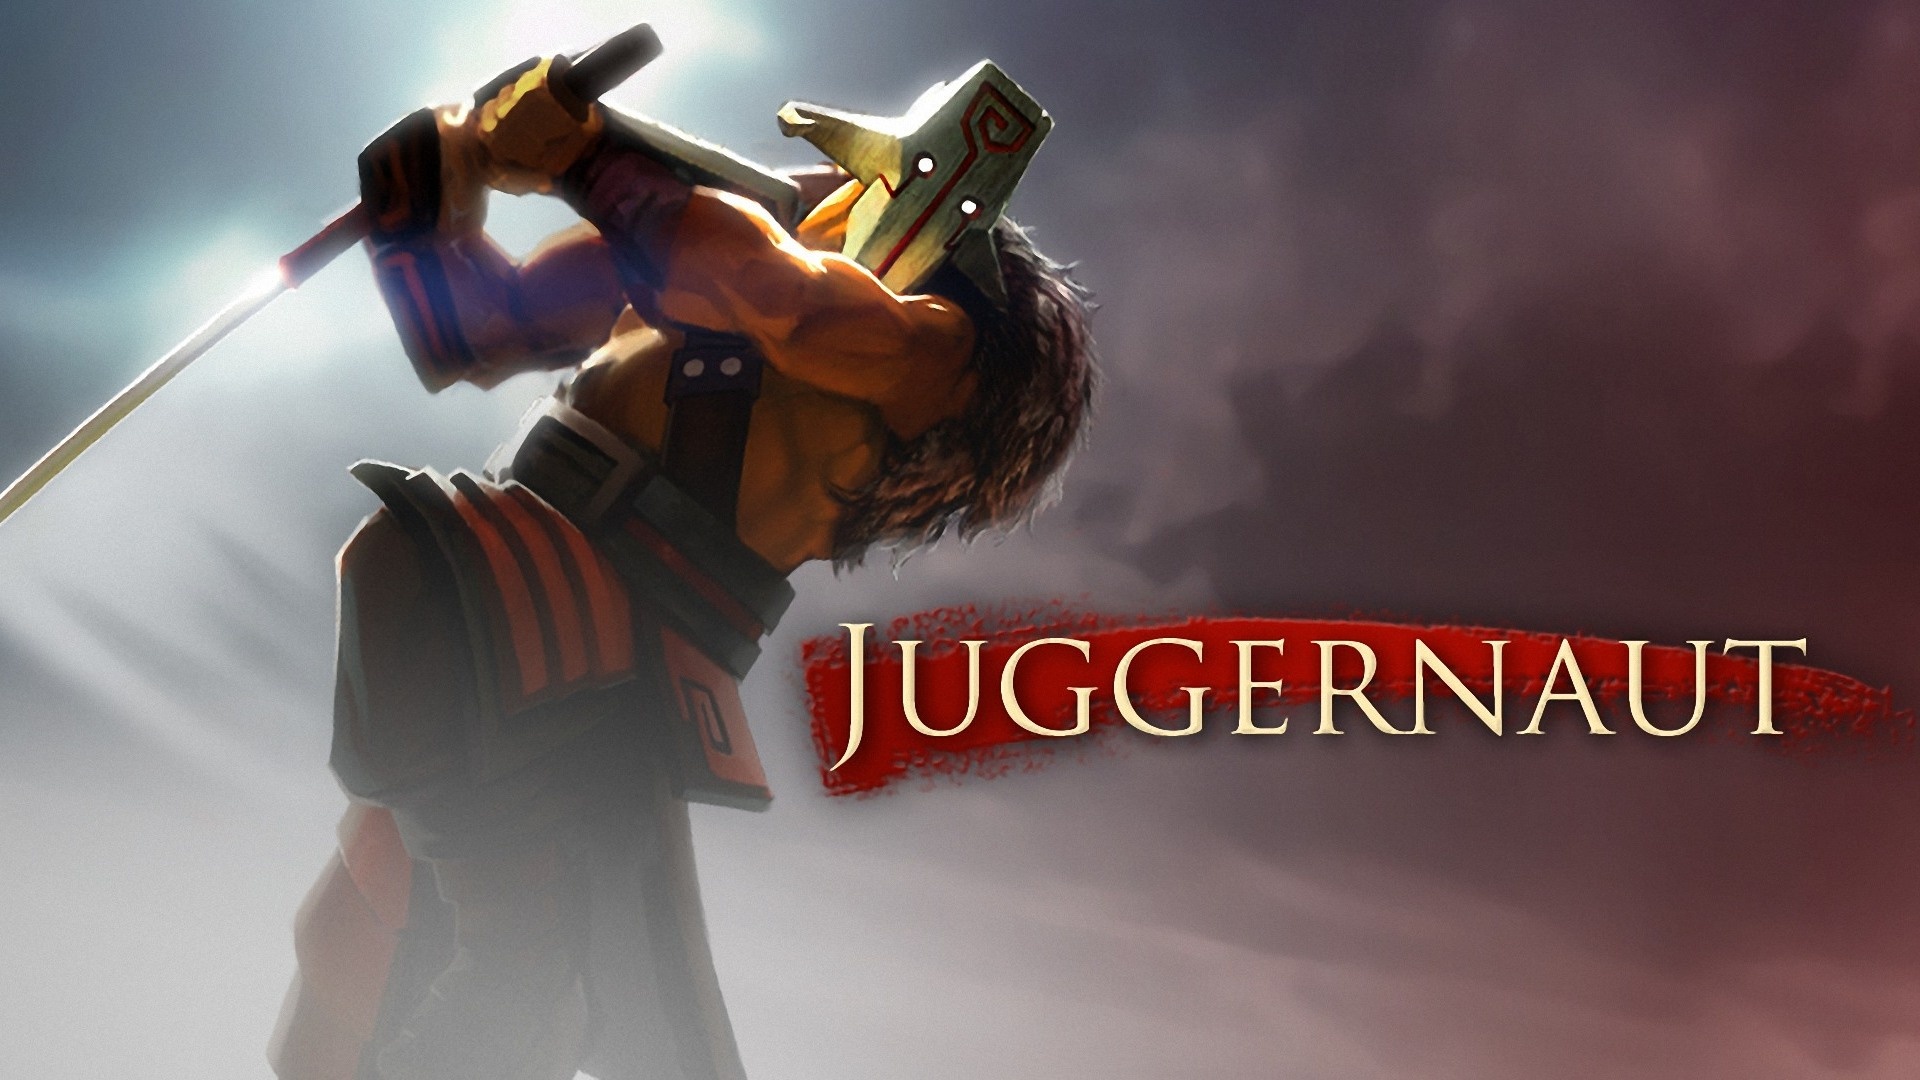 Juggernaut - DOTA 2 Game Wallpapers Gallery